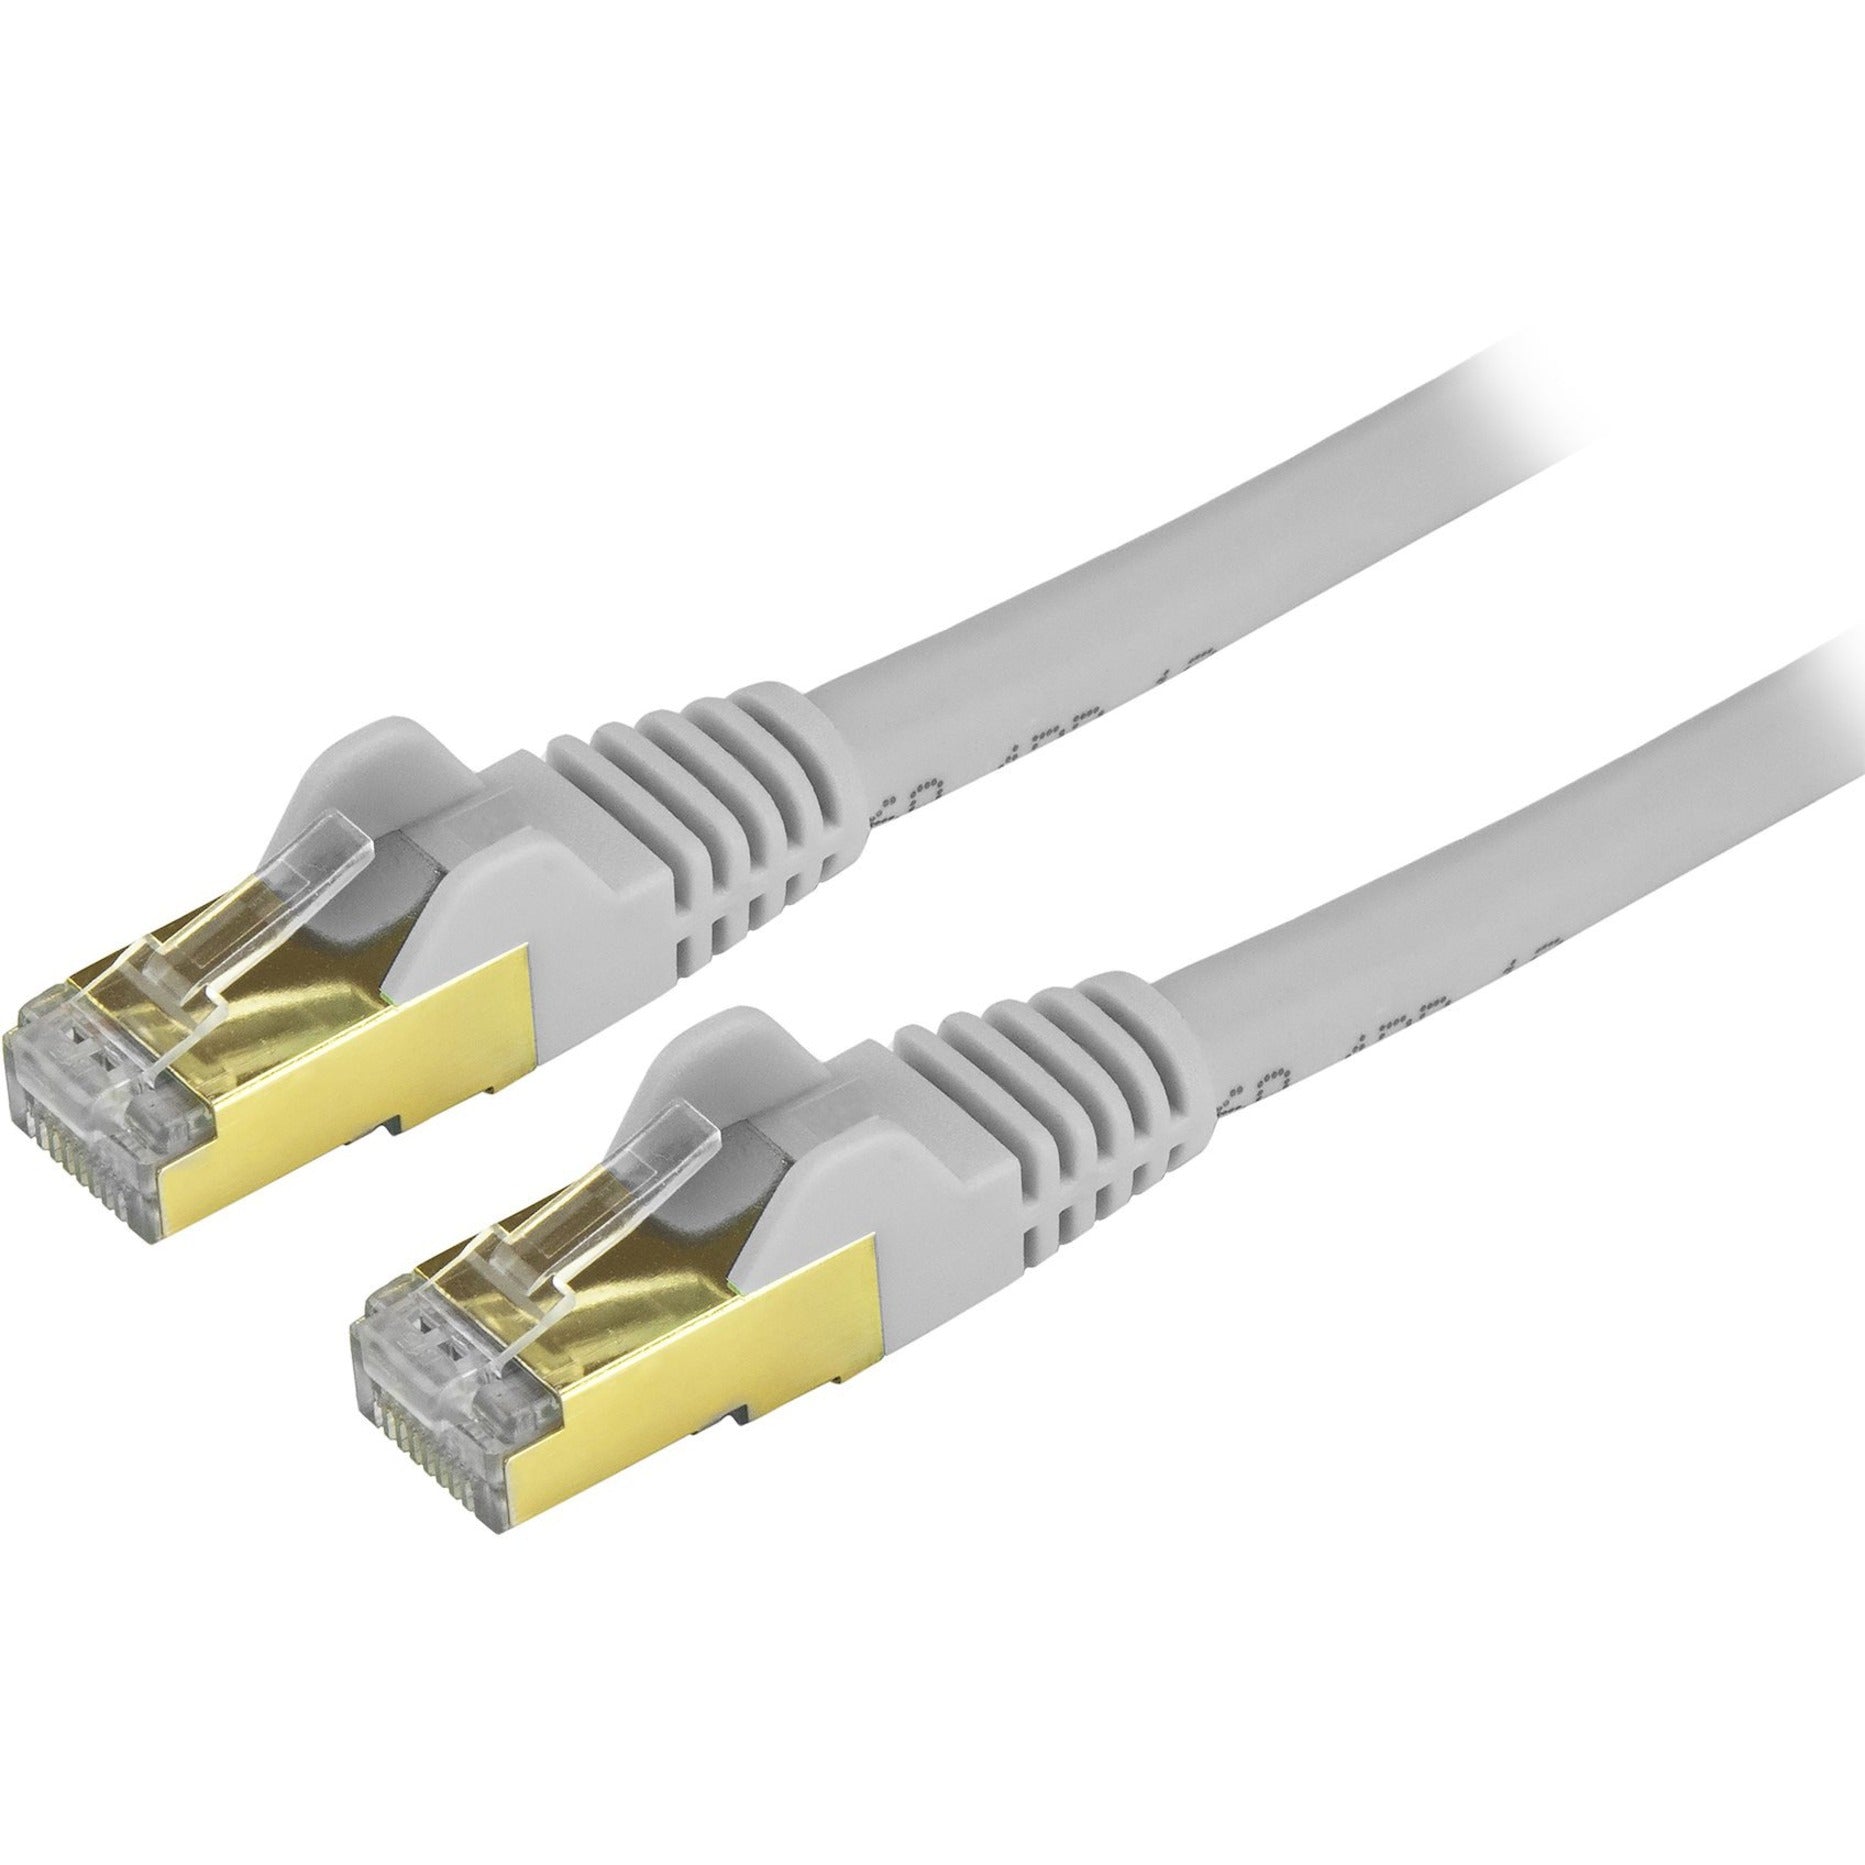 StarTech.com C6ASPAT20GR Cat6a Ethernet Patch Cable - Shielded (STP) - 20 ft., Gray, Snagless RJ45 - Long Ethernet Cord